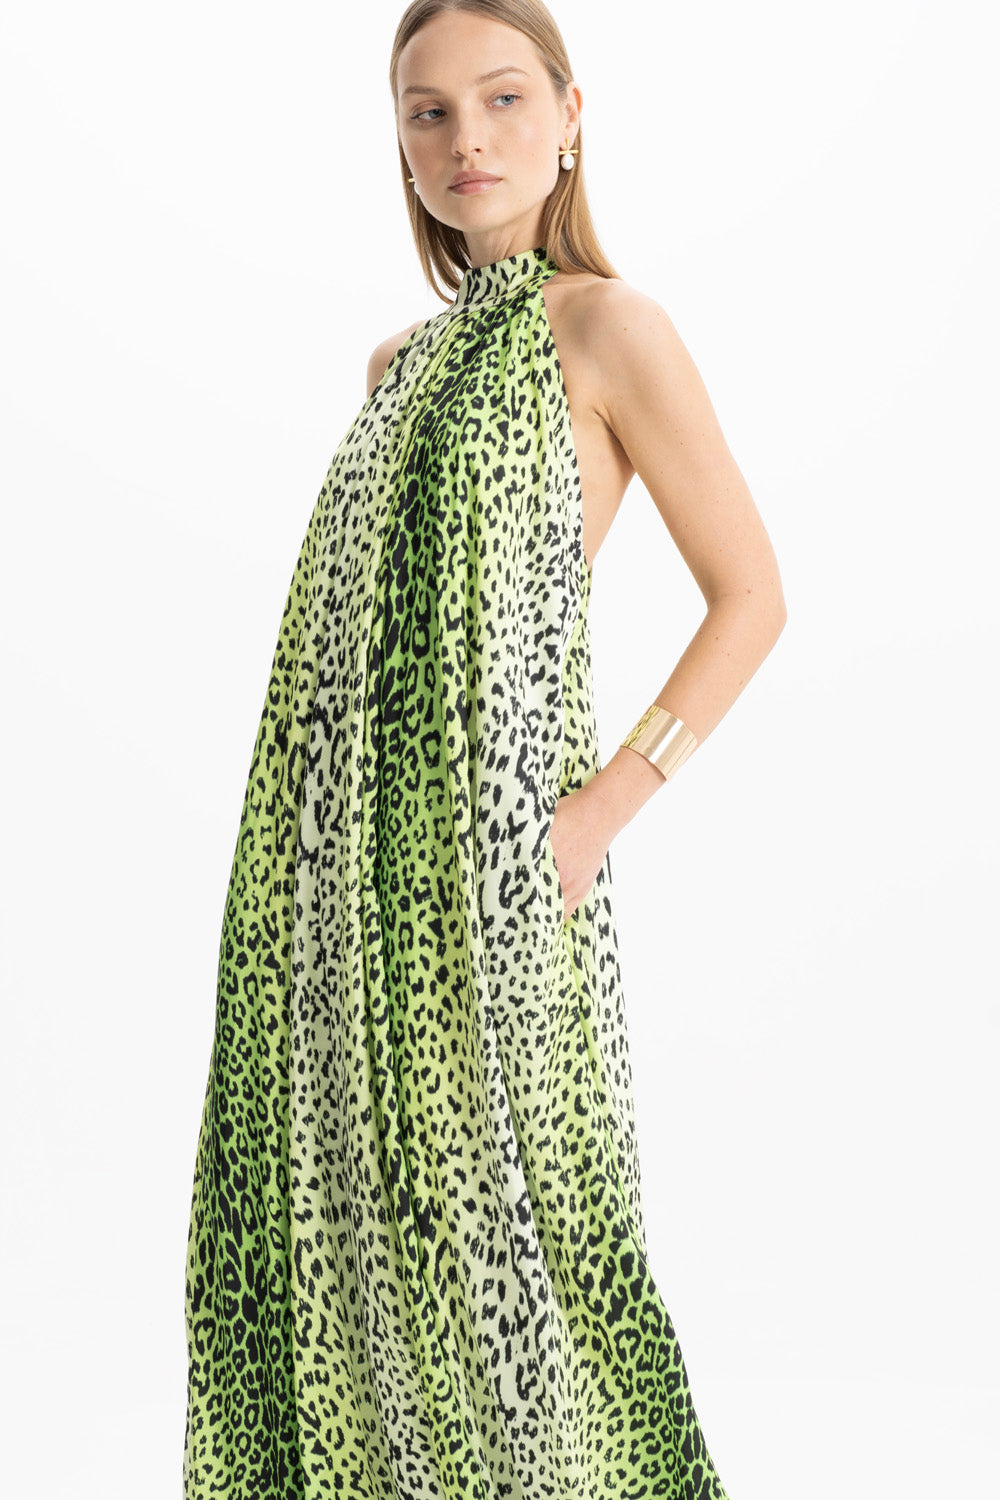 Pam Satin Green Leopard Halter Maxi Dress